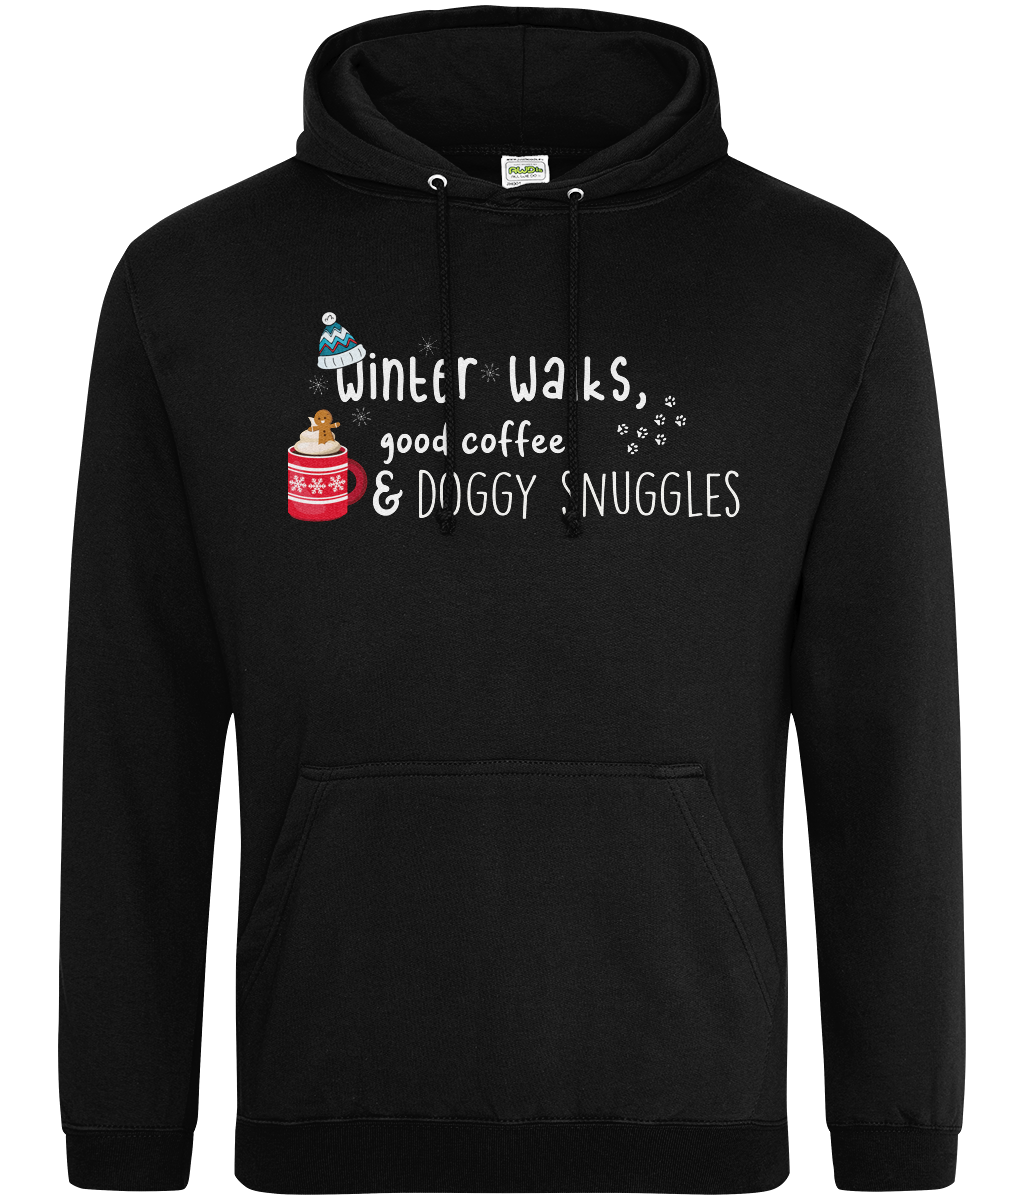 Winter Walks, Good Coffee & Doggy Snuggles hoodie